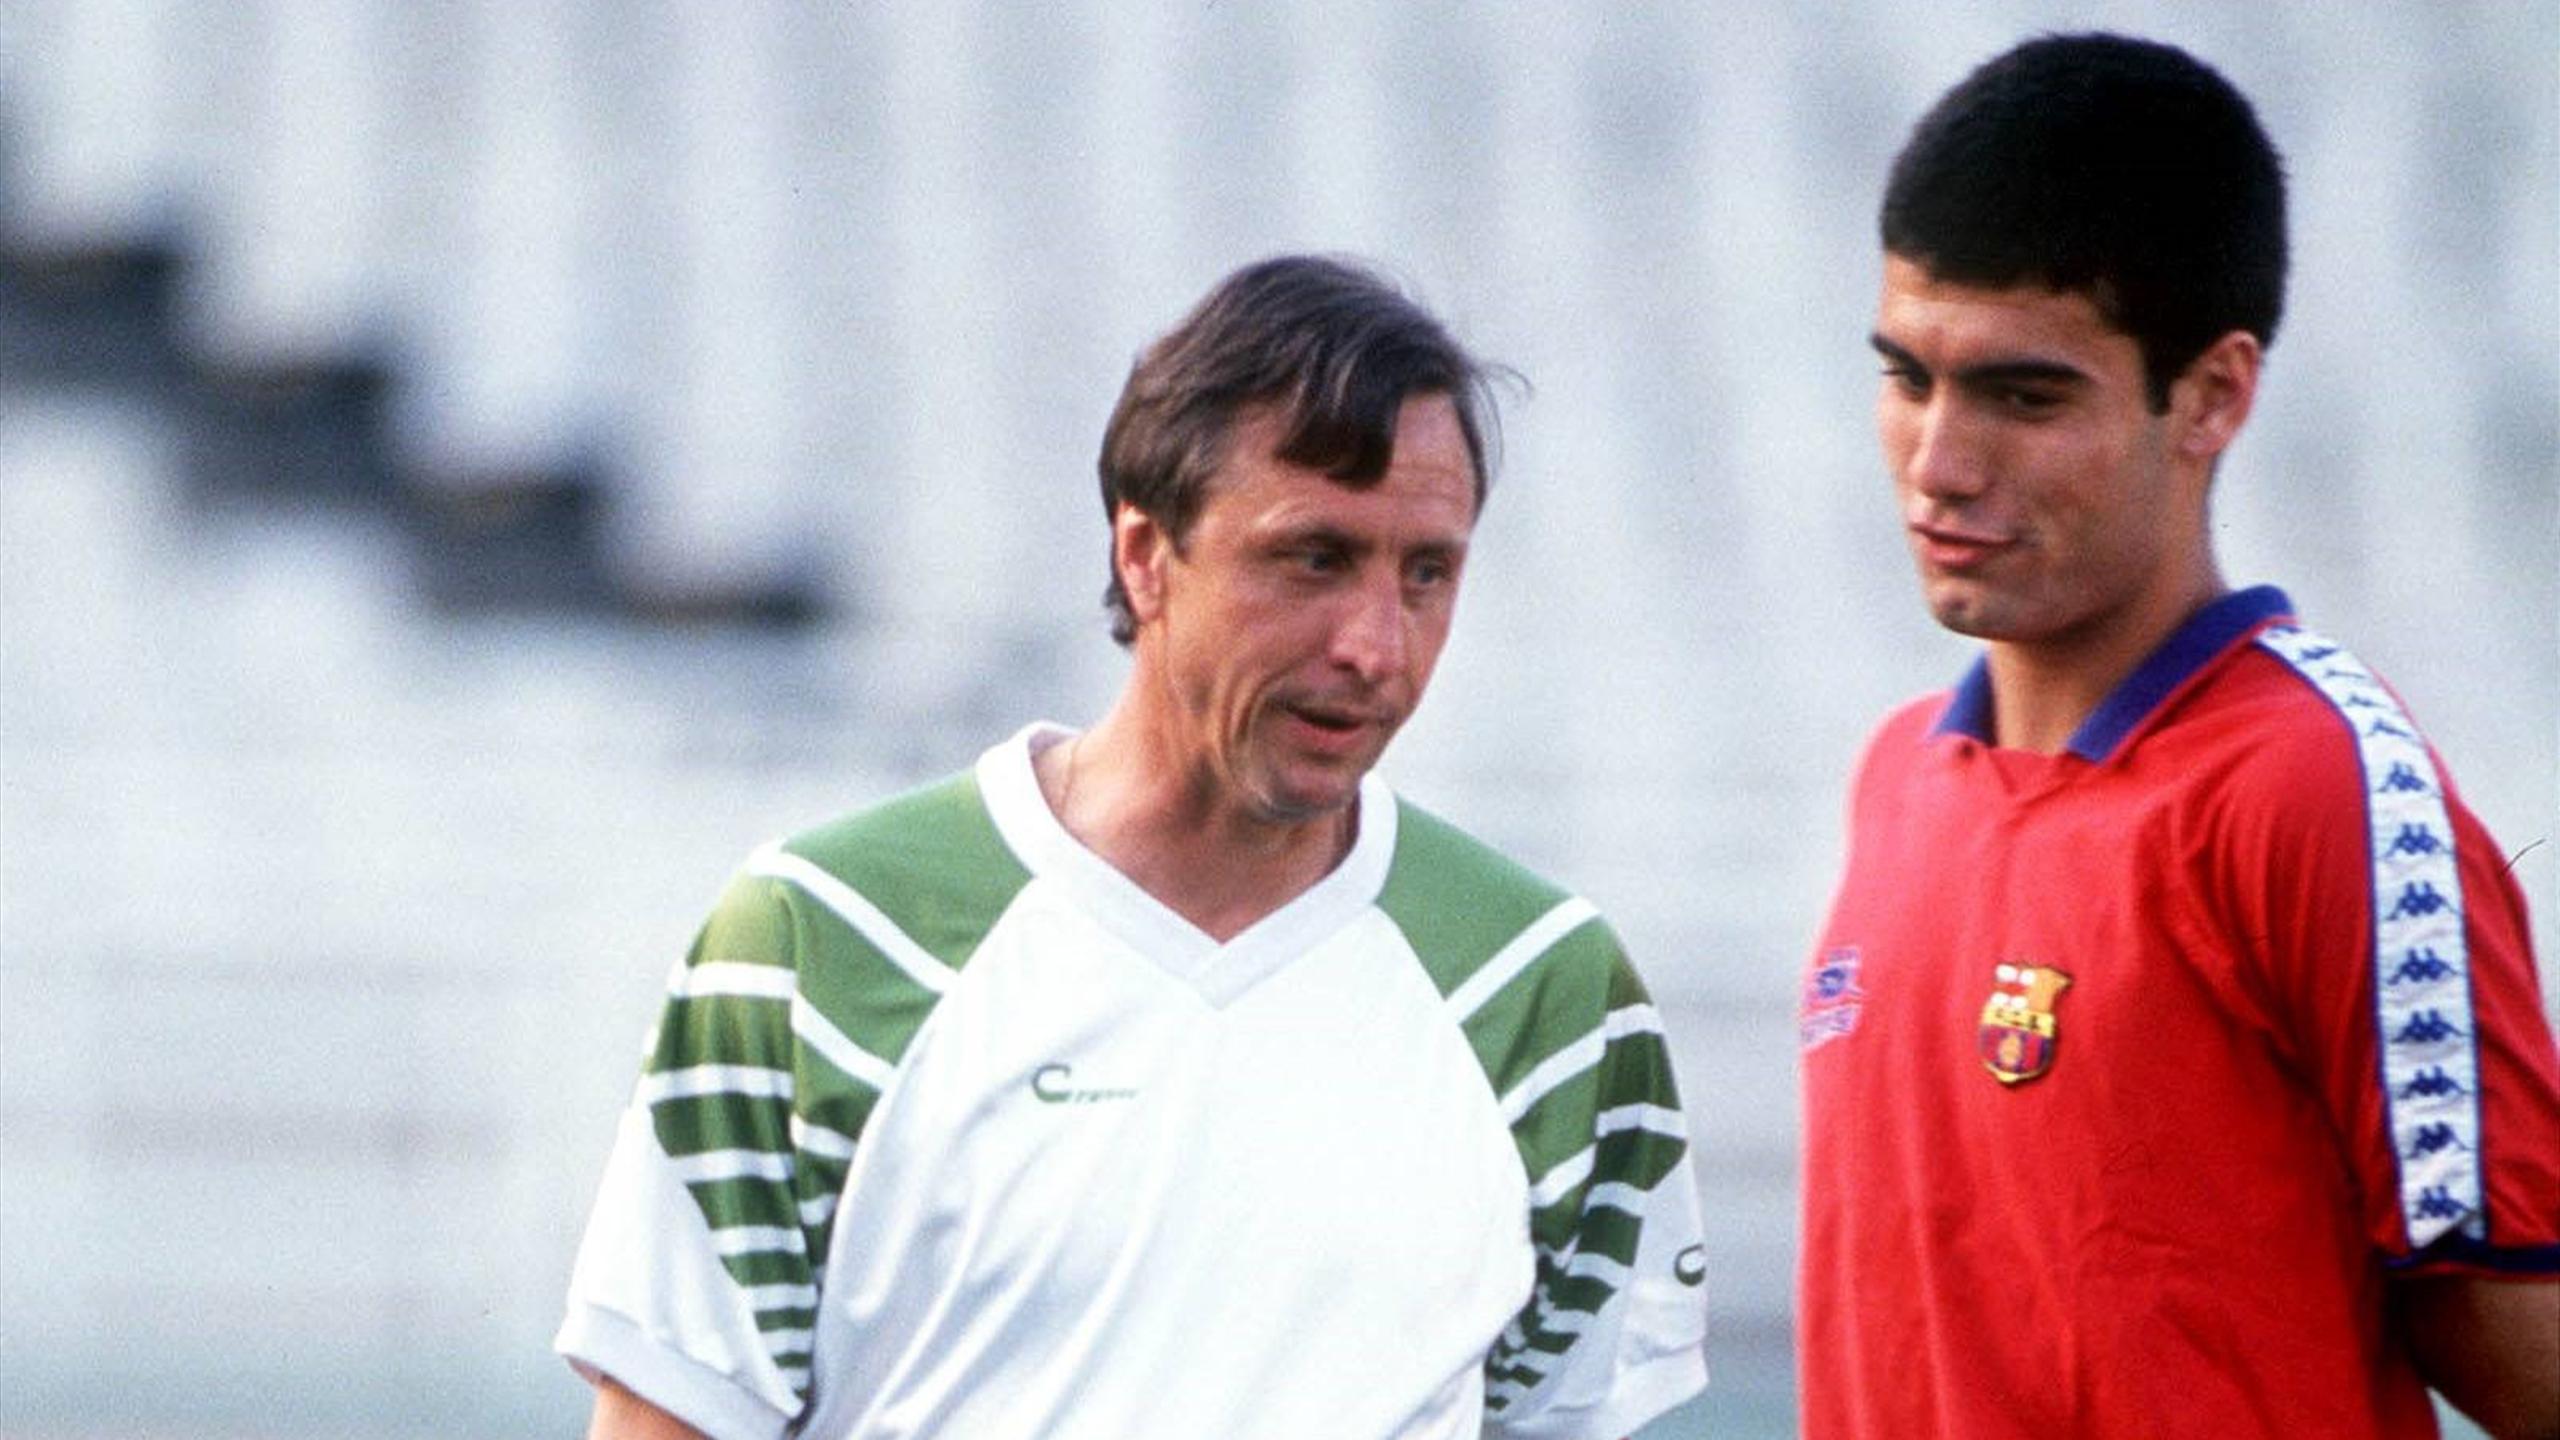 Johan Cruyff Hintergrundbild 2560x1440. Johan Cruyff's legacy? The whole of modern football